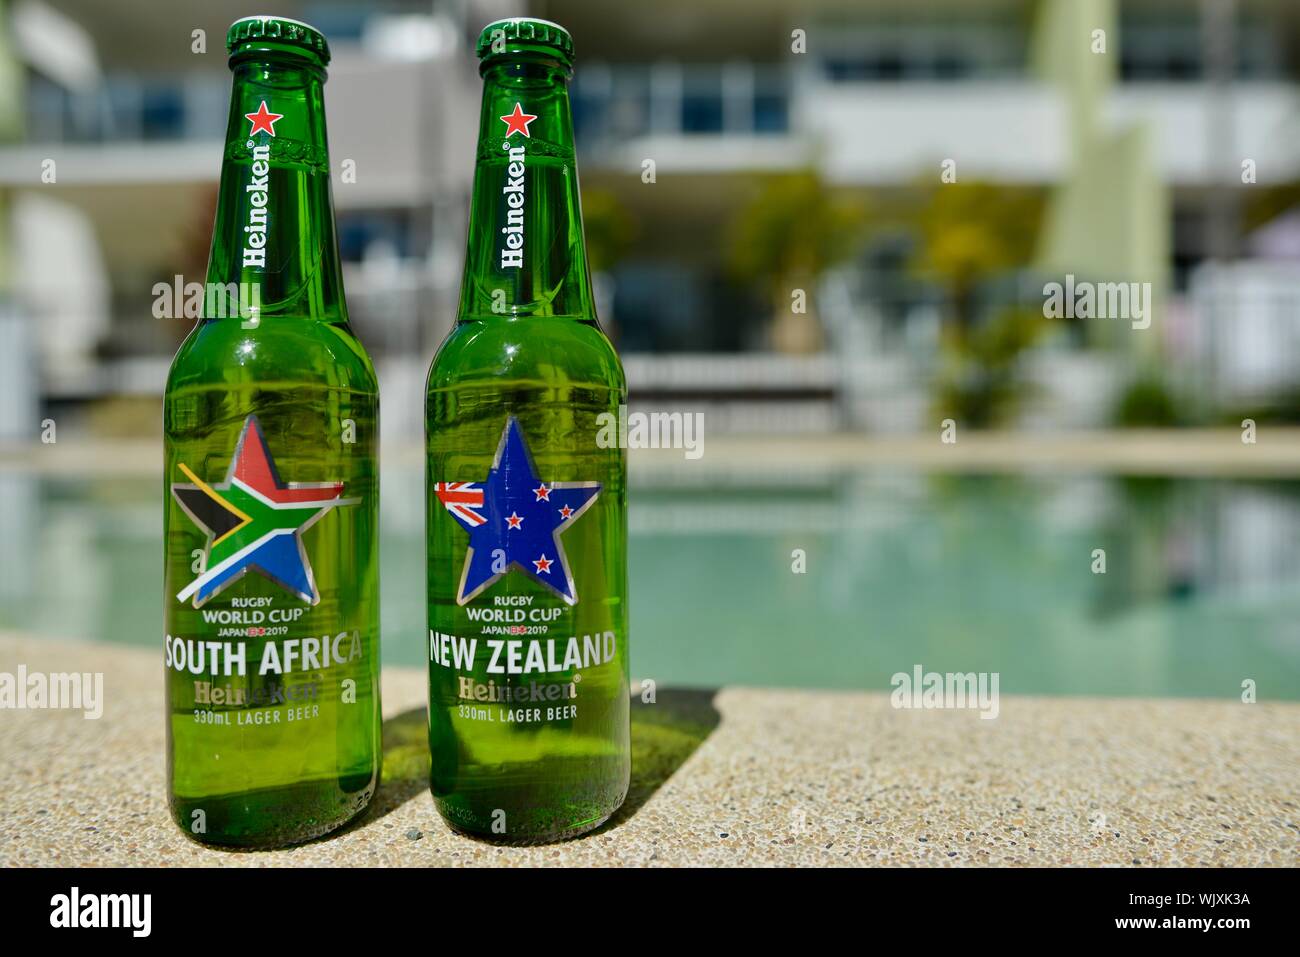 South Africa versus New Zealand, Heineken 2019 Japan Rugby world cup beer bottles Stock Photo